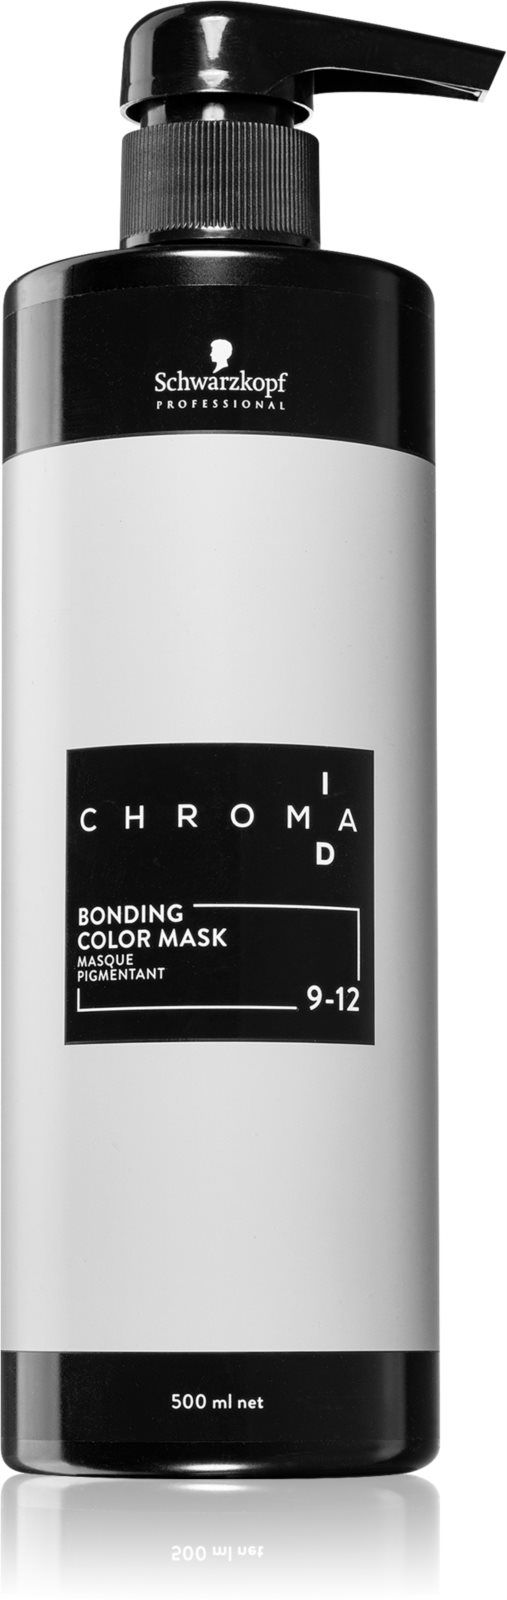 Bonding color mask. Chroma ID Schwarzkopf 9-12. Chroma ID 9-12 250ml.